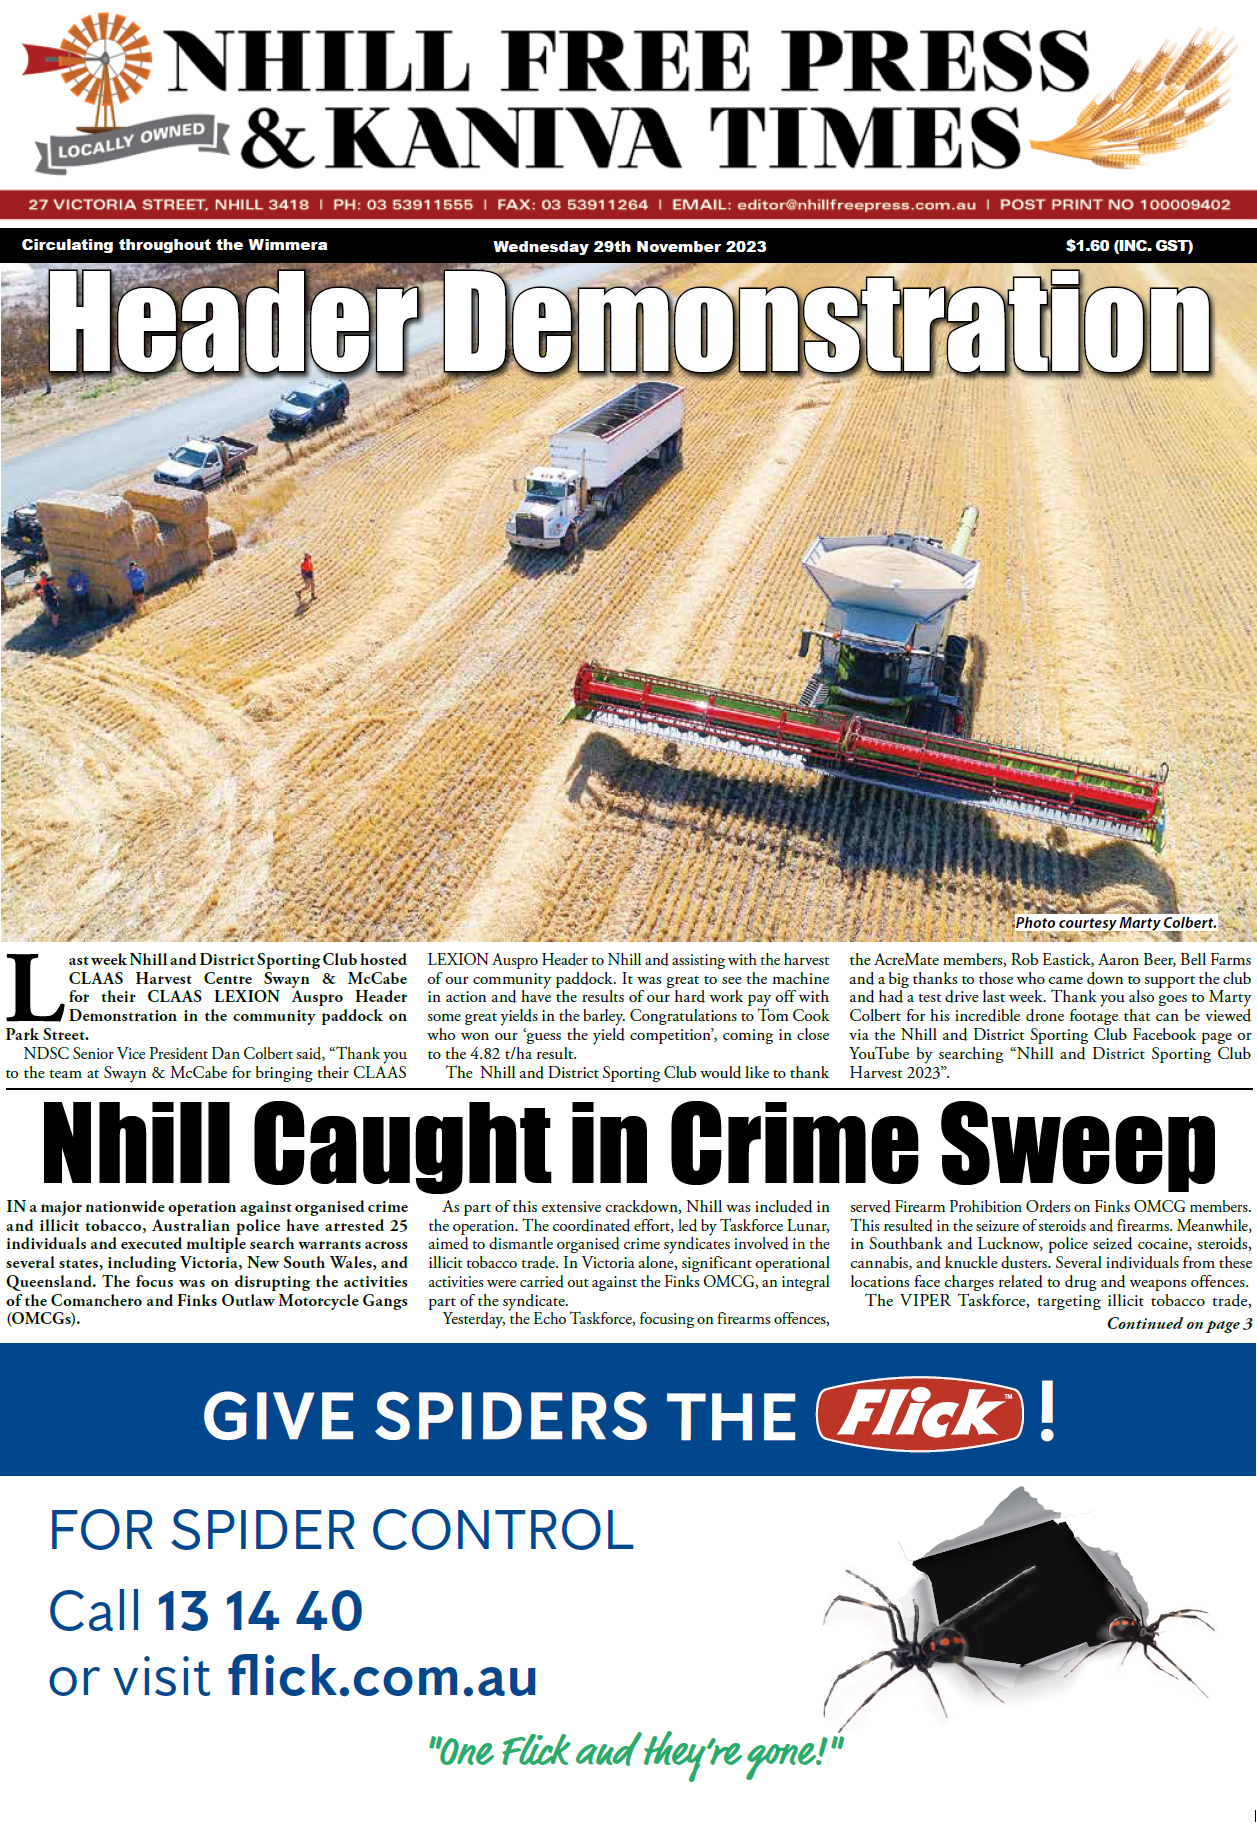 Nhill Freee Press & Kaniva Times 29 November 2023